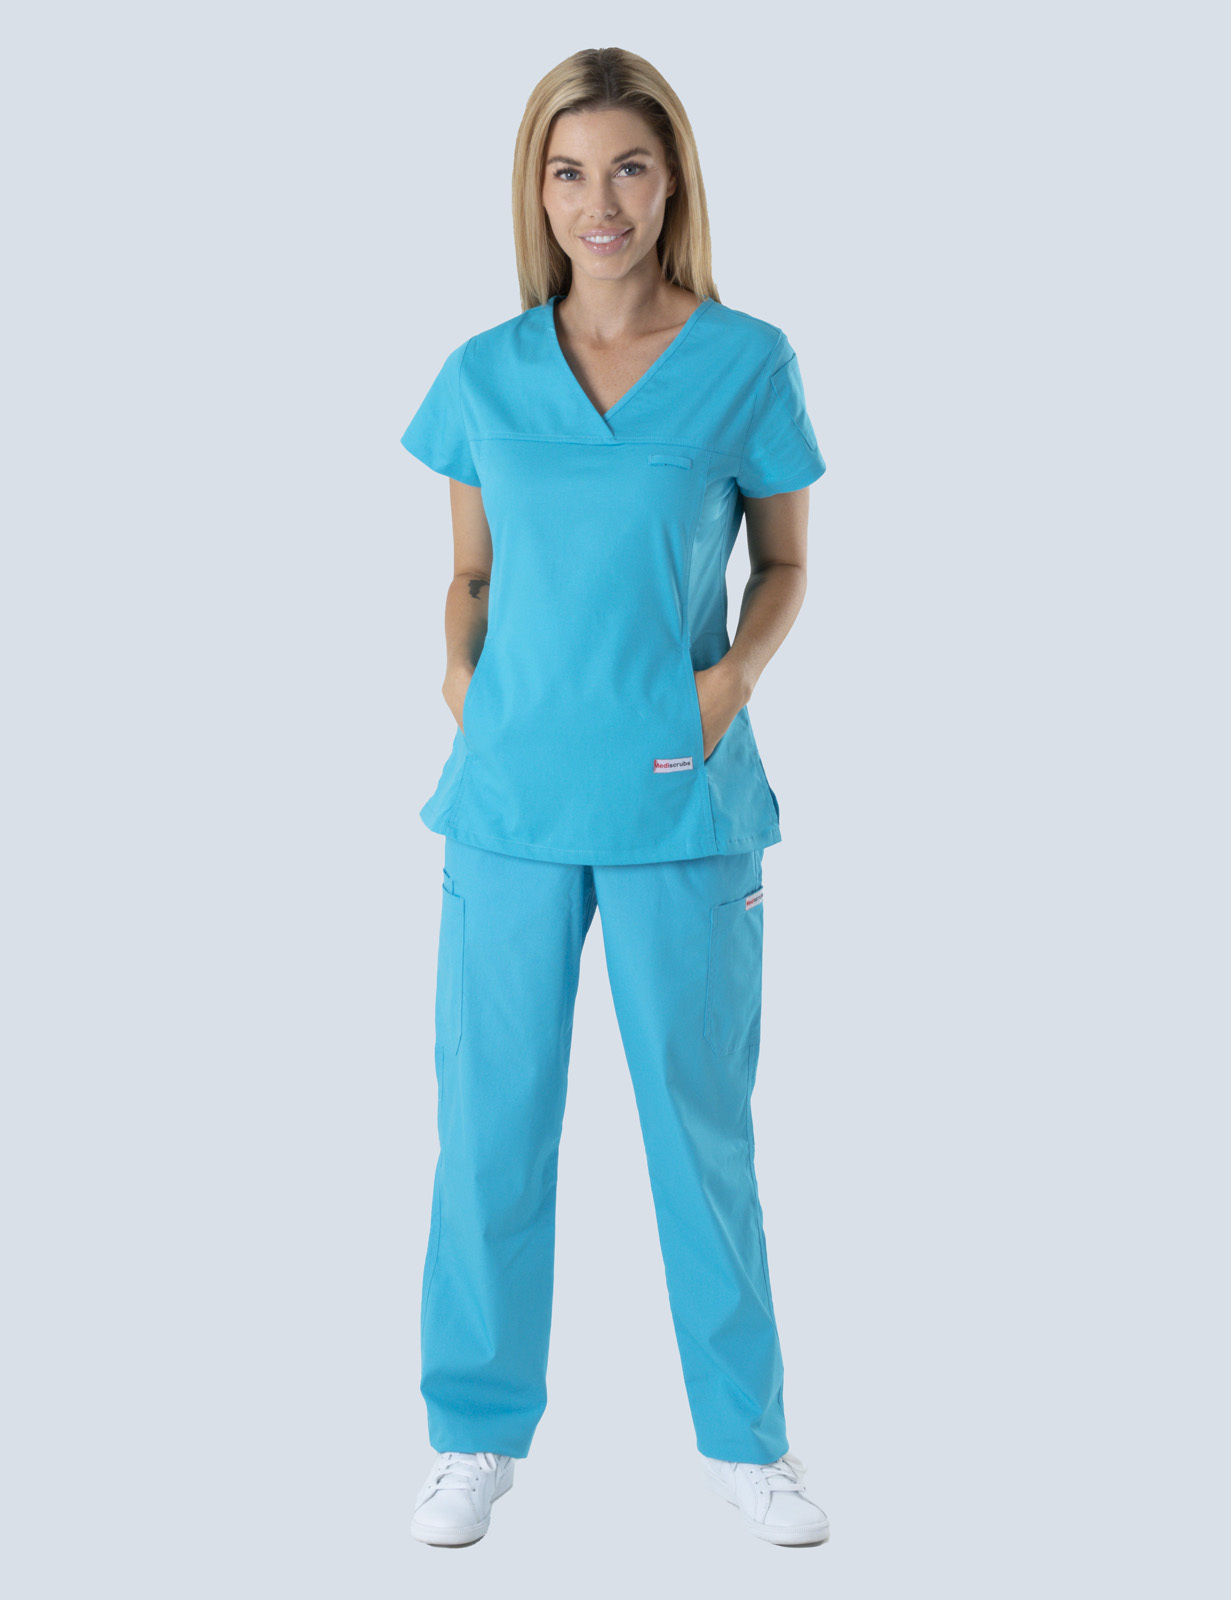 Nambour Hospital - Enrolled Nurse (4 Pocket Scrub Top and Cargo Pants in Aqua incl Logos)